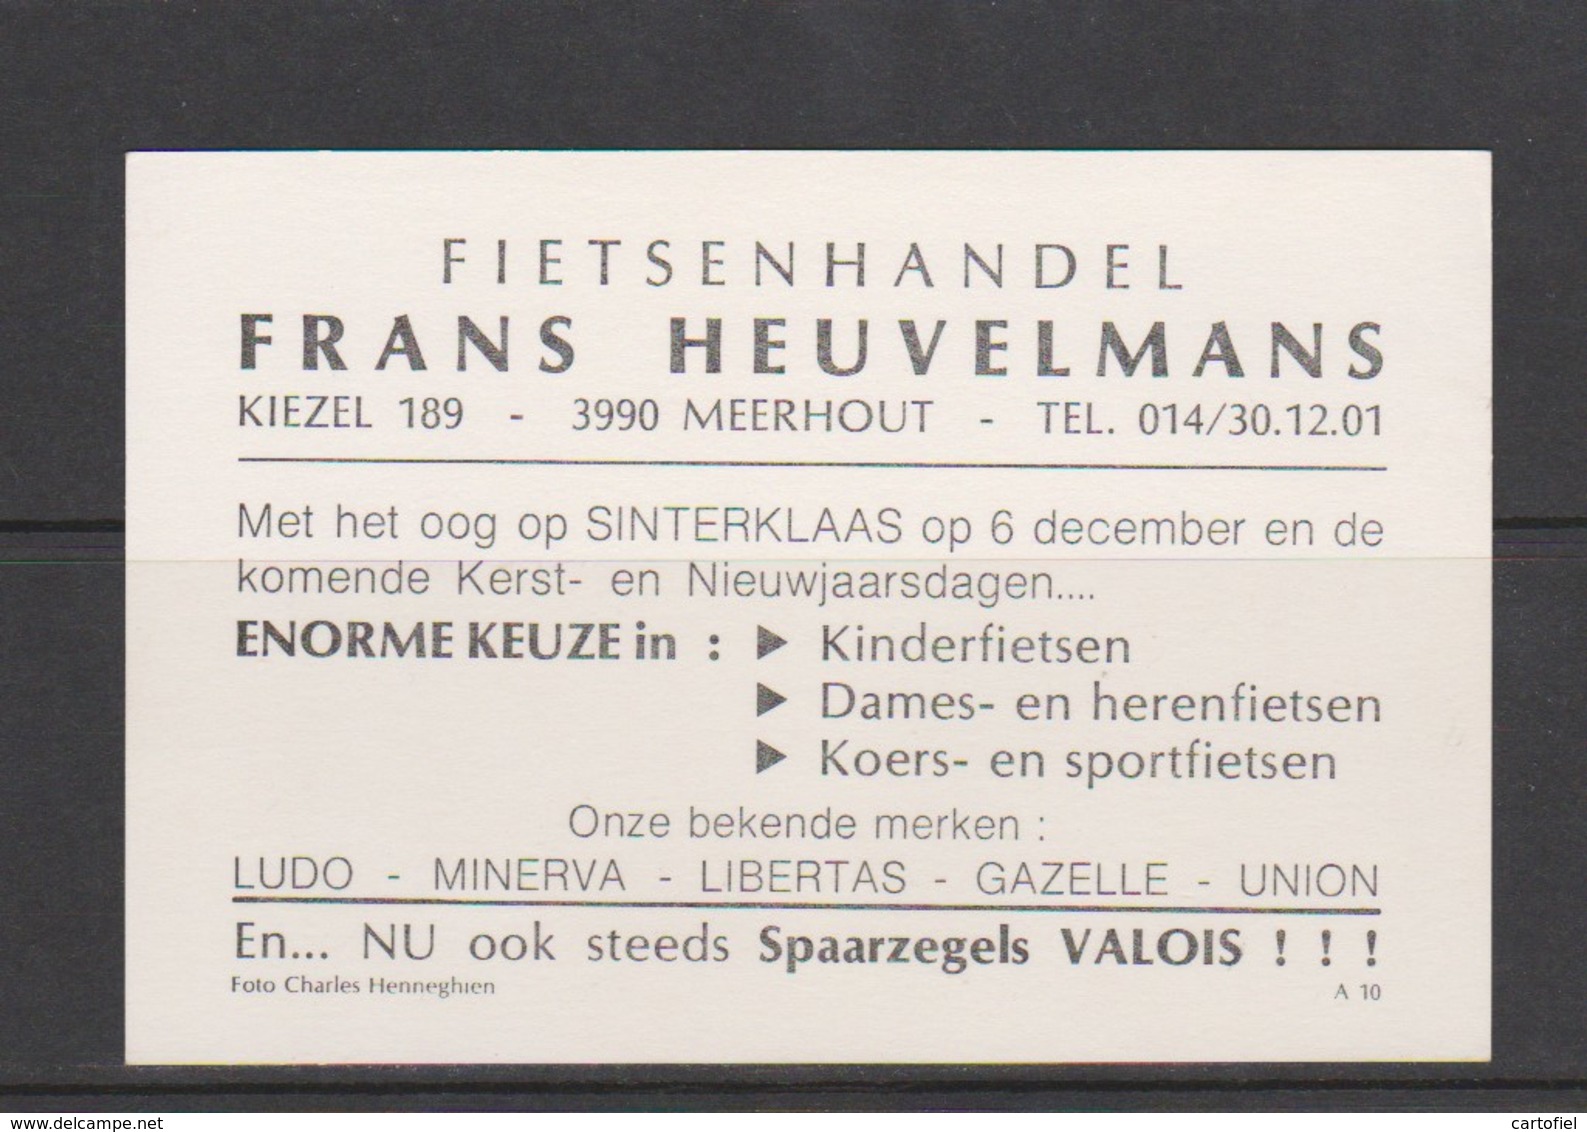 MEERHOUT-RECLAMEKAART-VALOIS-FIETSENHANDEL-FRANS HEUVELMANS-KIEZEL 189-FOTO CHARLES HENNEGHIEN-BRUSSEL-RARE-ZIE 2 SCANS! - Meerhout